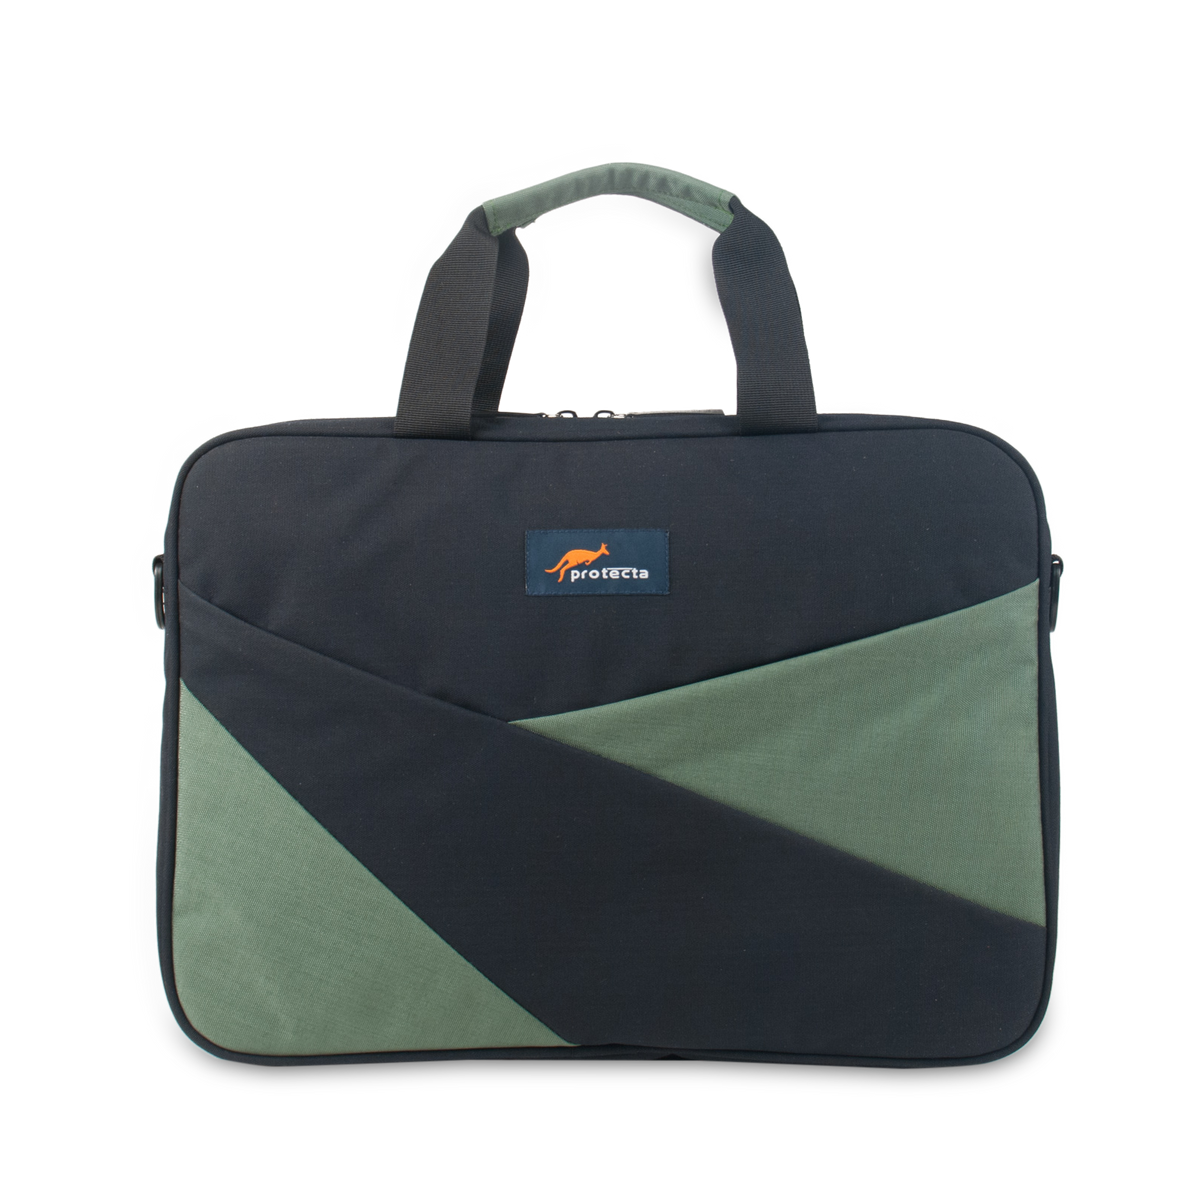 Protect Road Warrior Laptop Bag Black-Green- Main